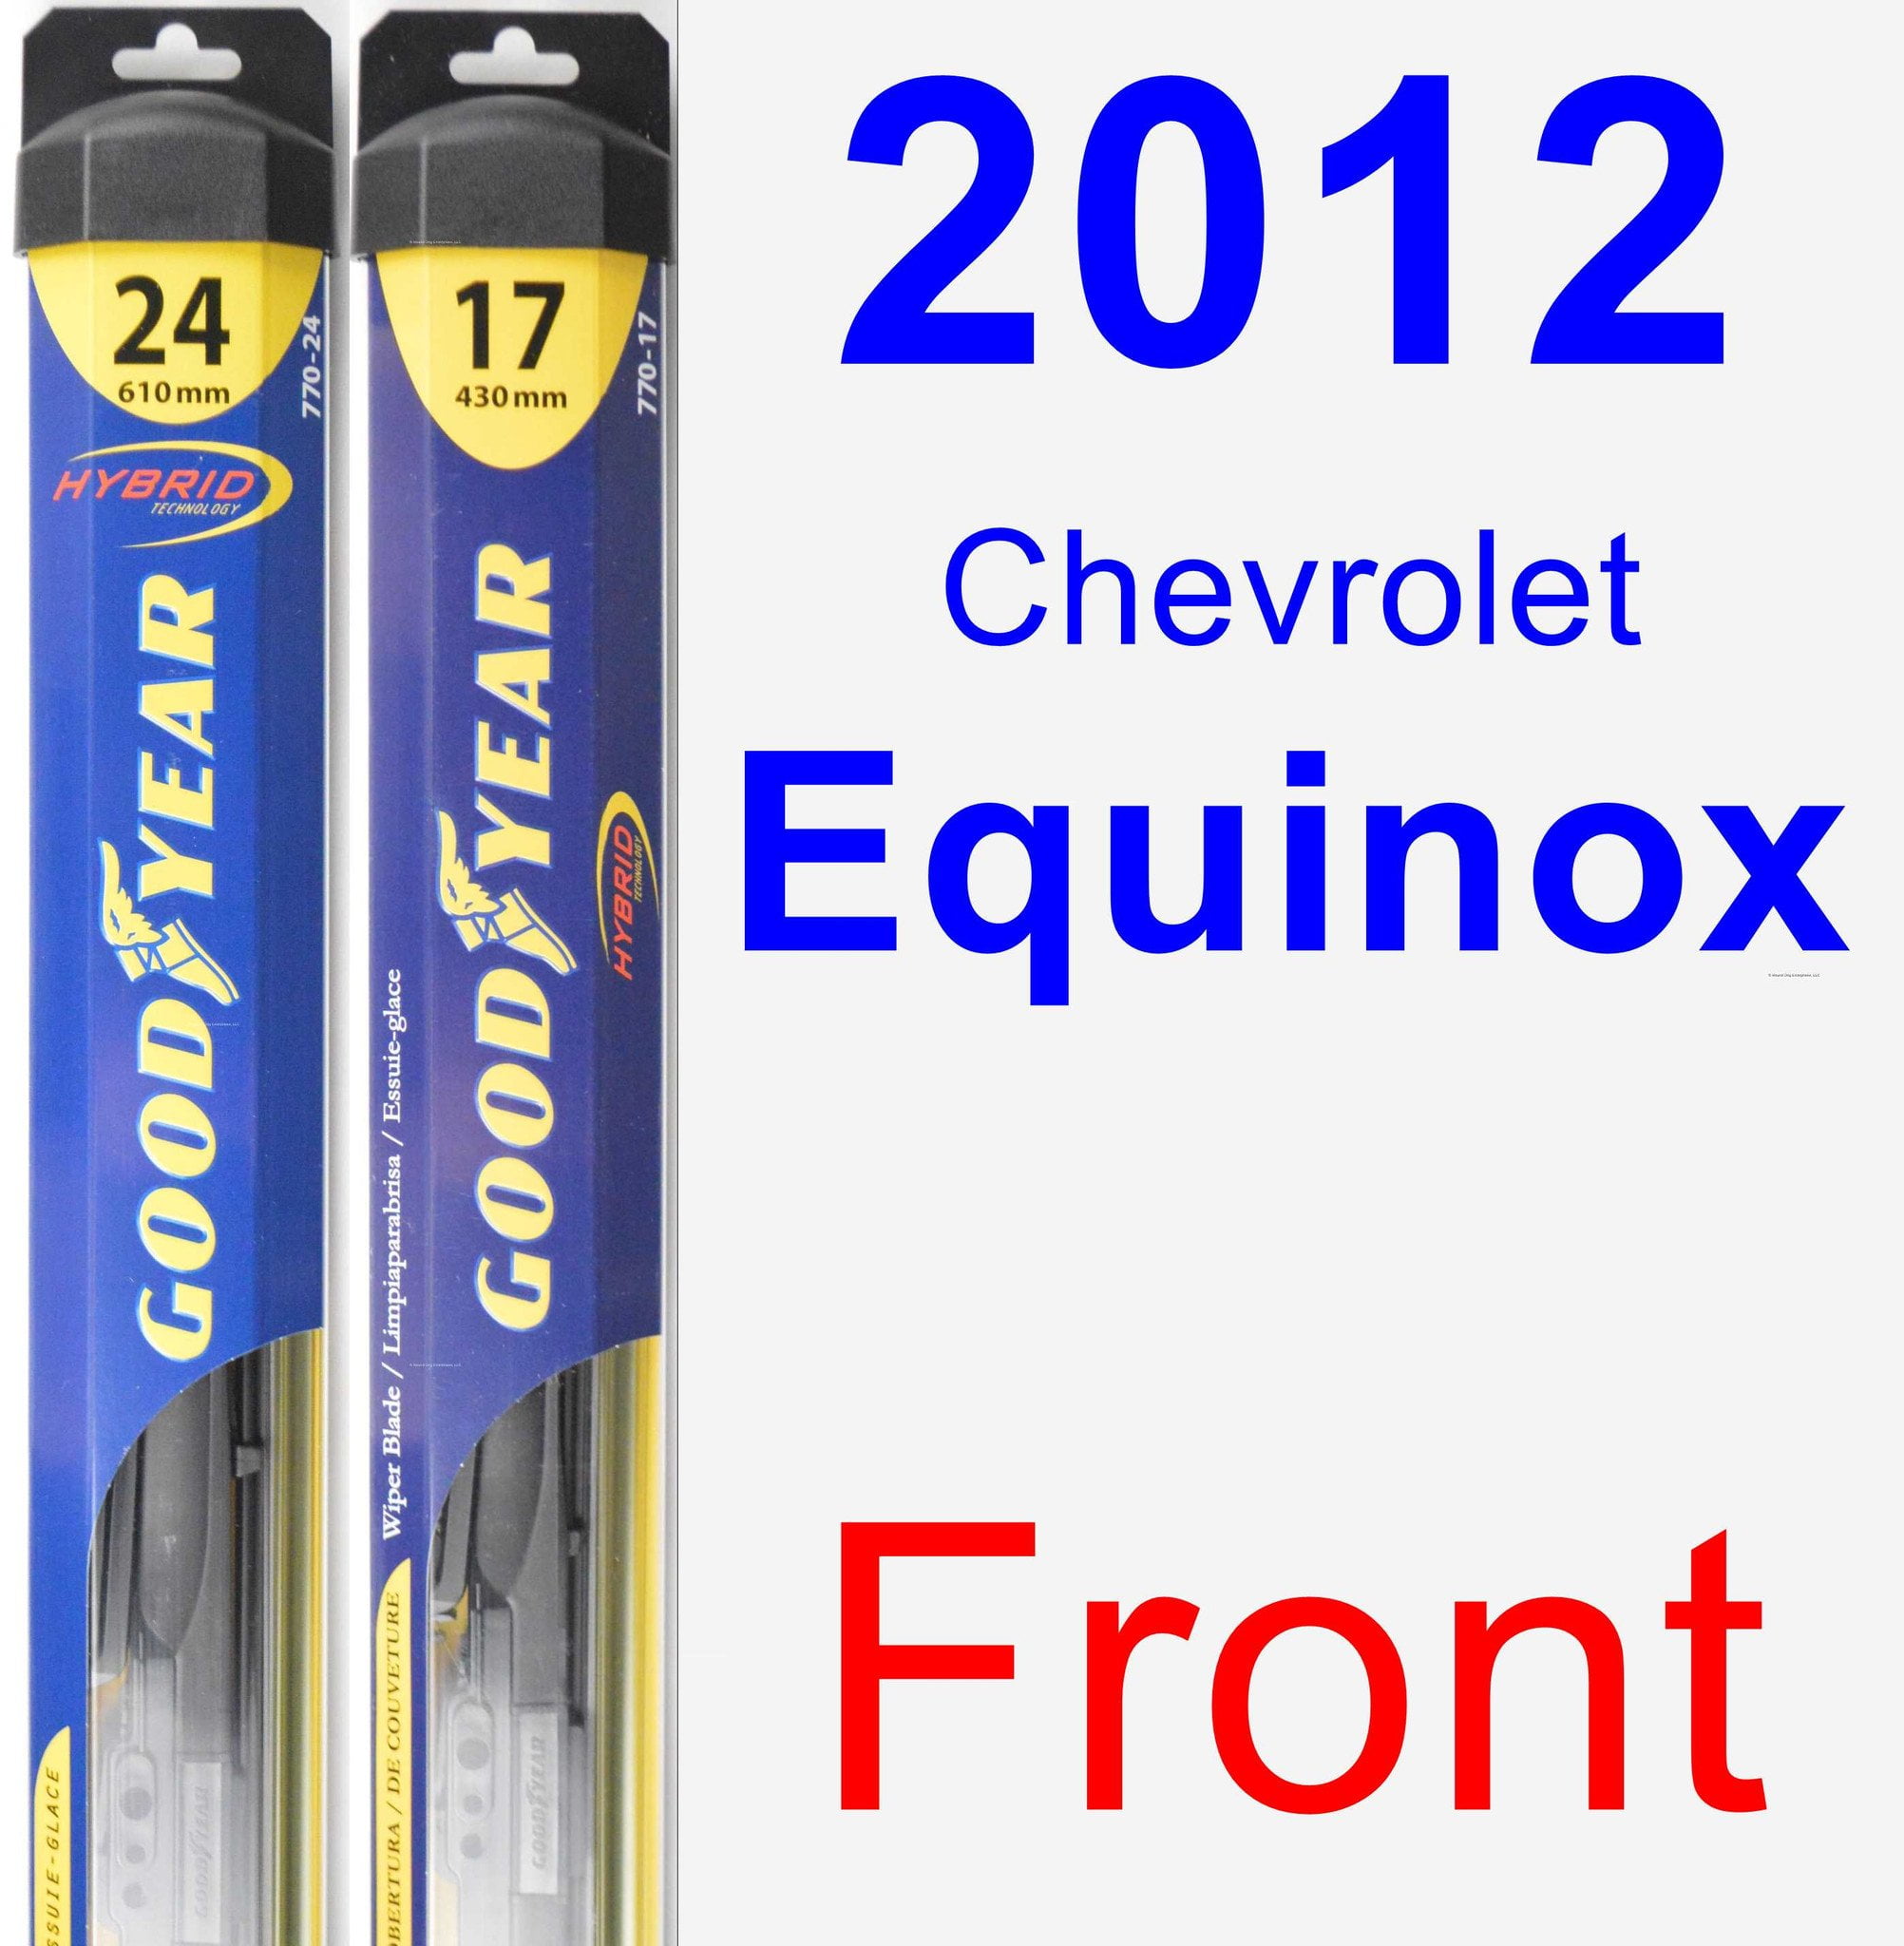 Set of 2 2 wiper blade for GMC Terrain Chevrolet Equinox 2010-2017 Ford Kuga MK1 2008-2012 Original Equipment Replacement Wiper Blade Set 24/17 